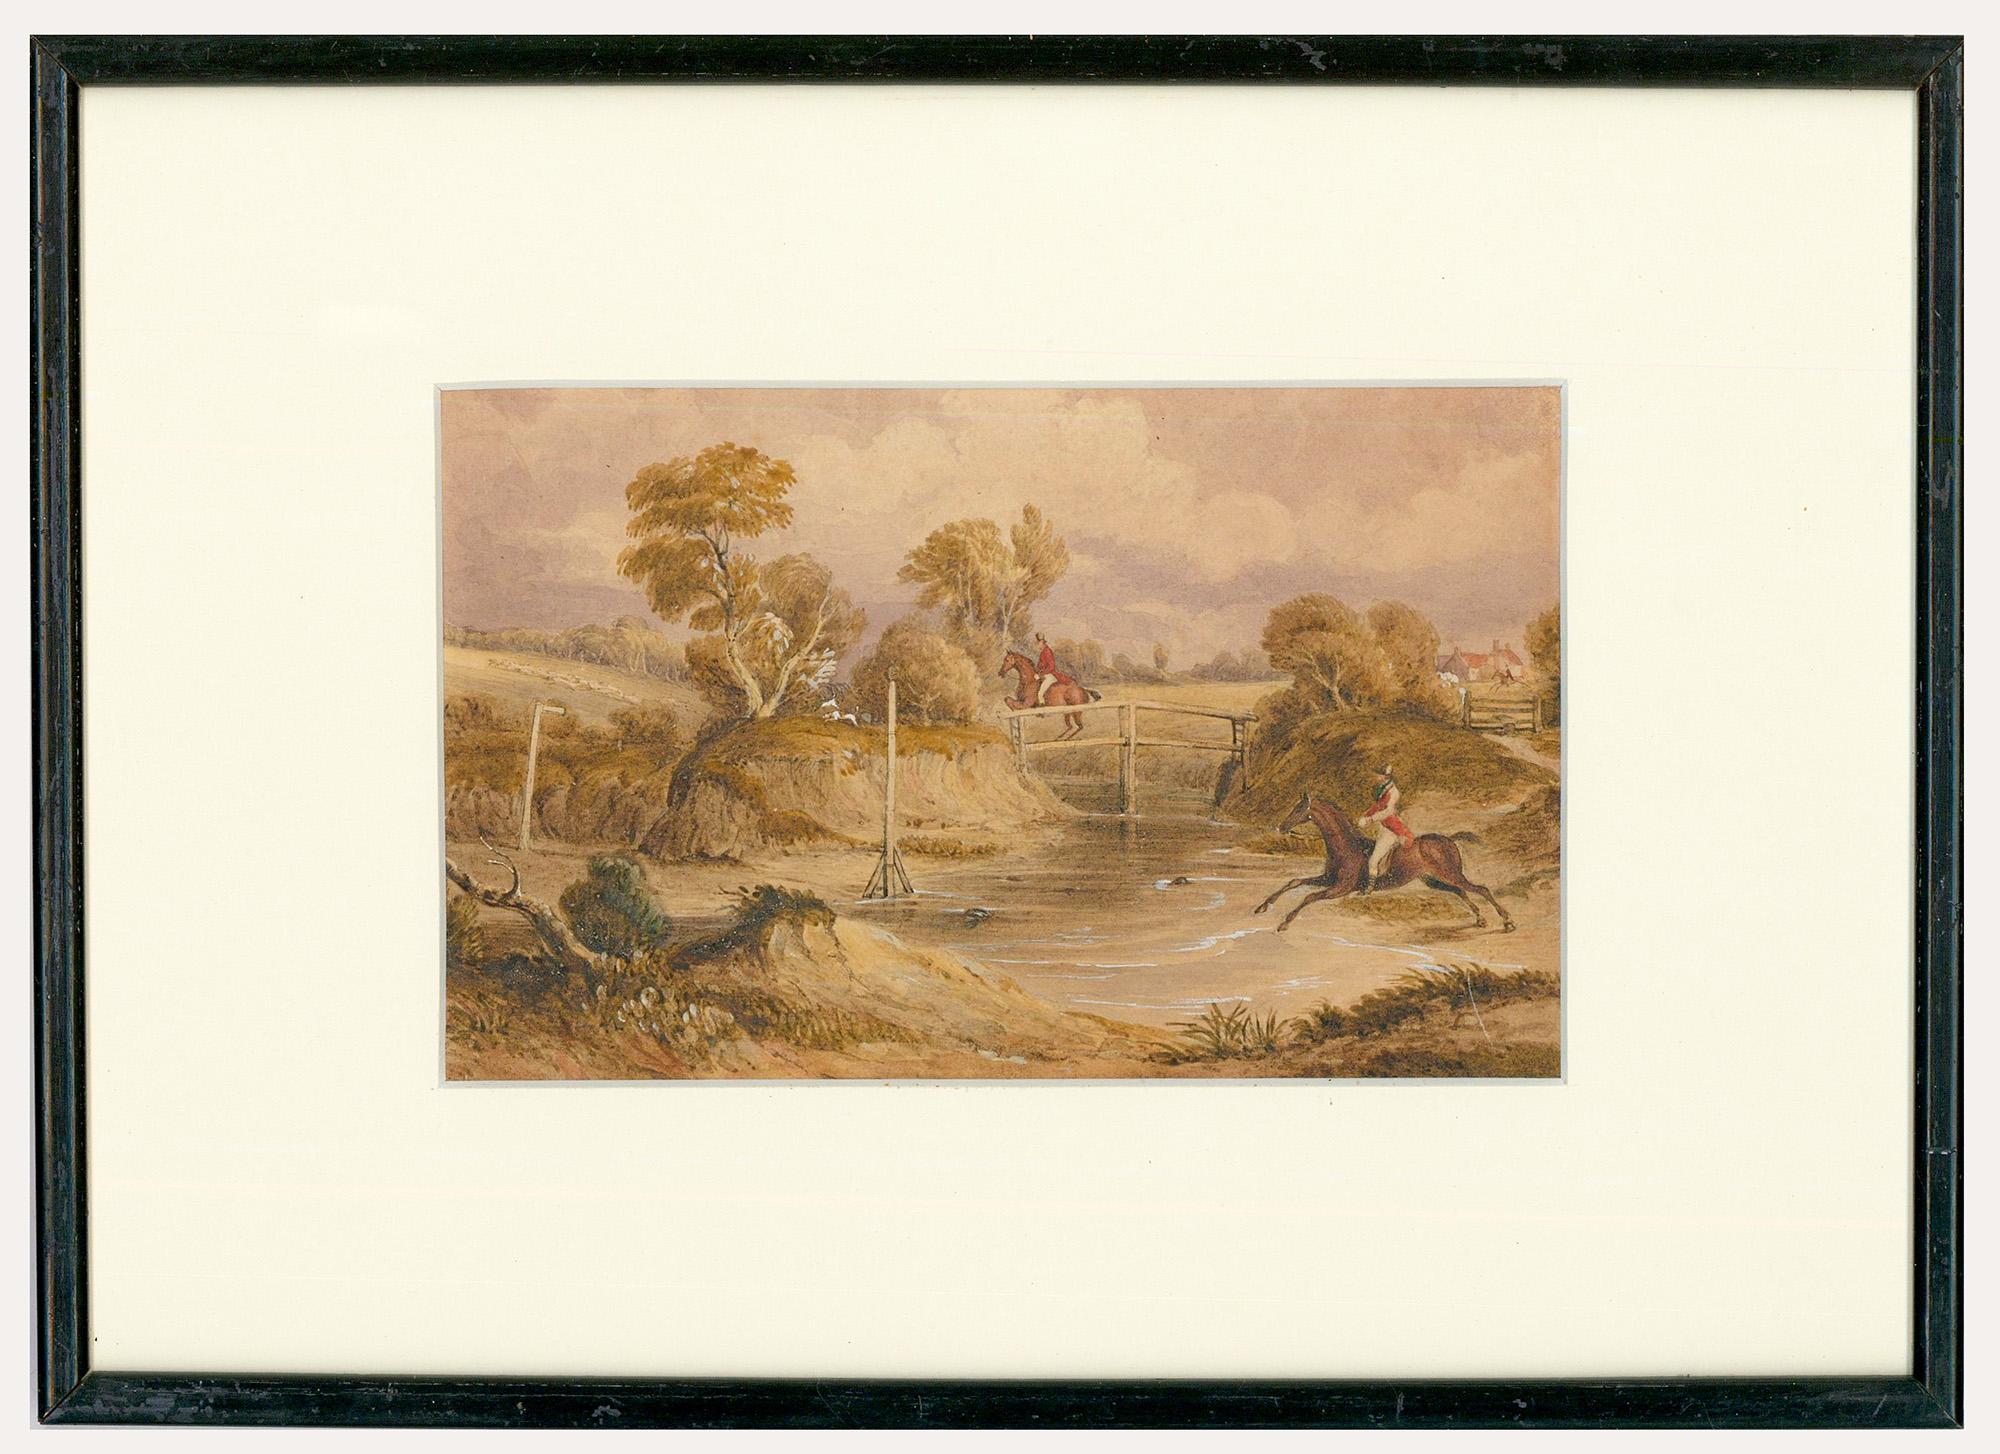 Unknown Landscape Art - 19th Century Watercolour - The Hunt